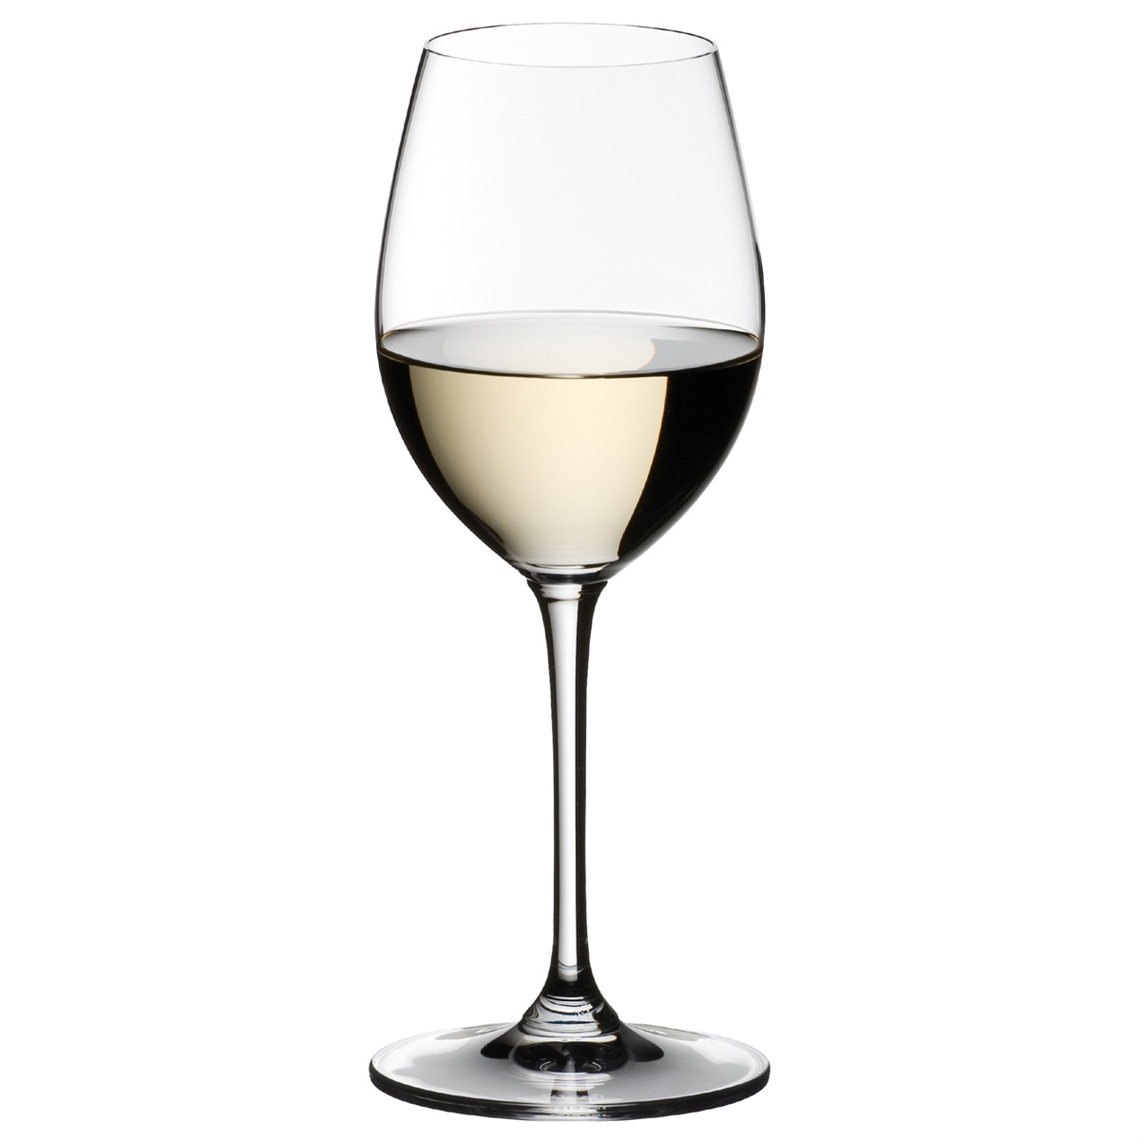 View more white wine glasses from our Dessert Wine Glasses range